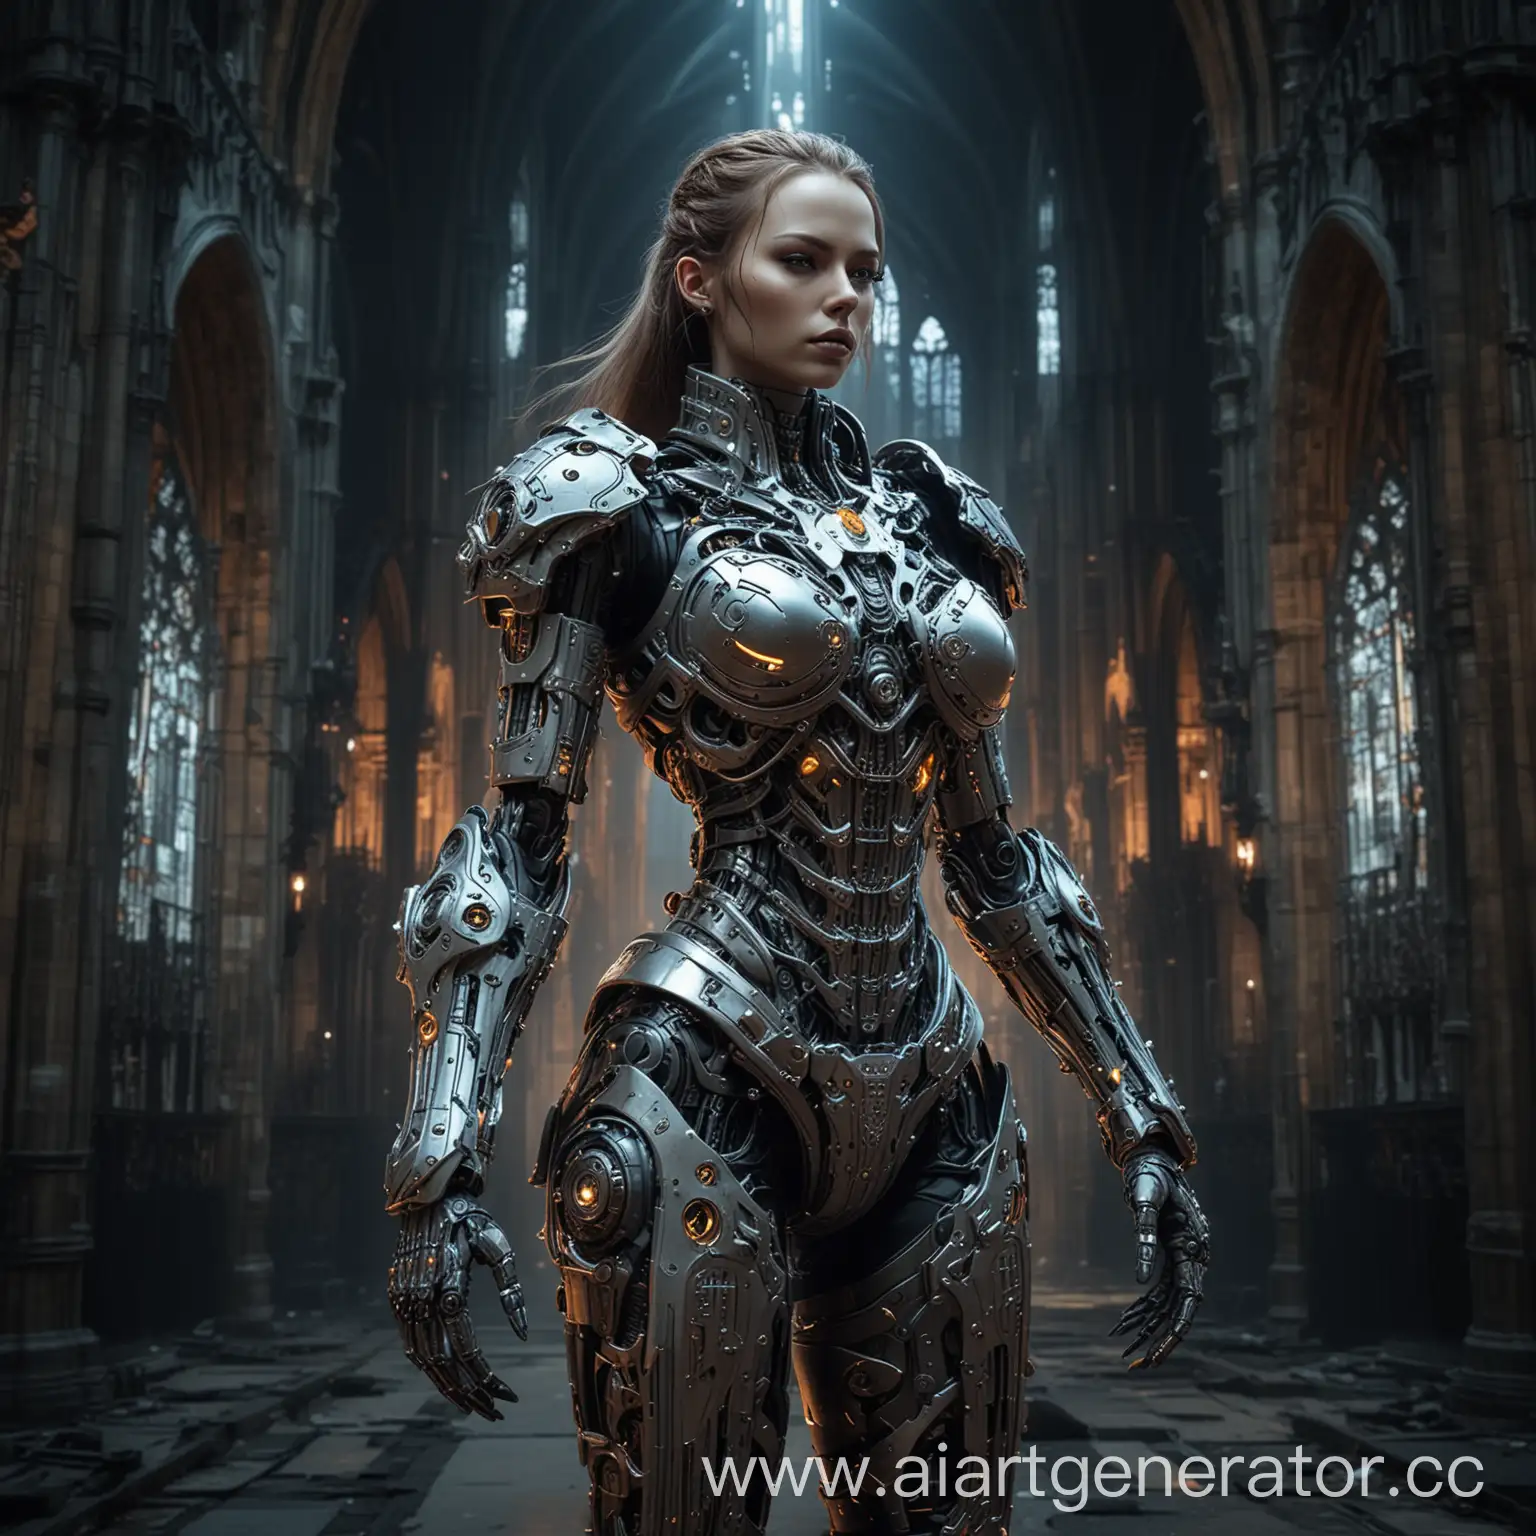 Biomechanical-CyborgWarrior-Battles-in-Infernal-Gothic-Cathedral